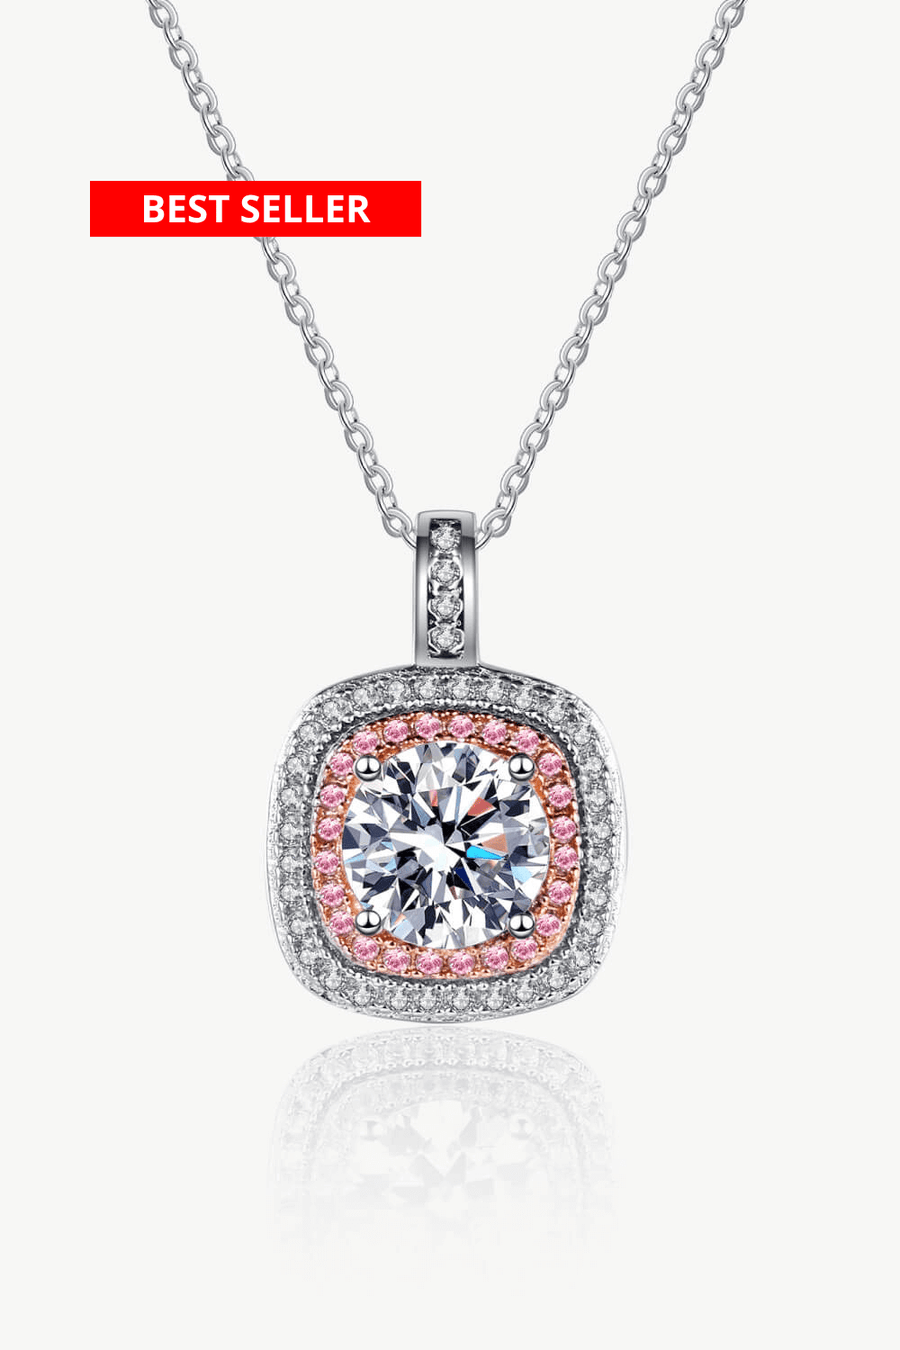 1# BEST Diamond Pendant Necklace Jewelry Gifts for Women | #1 Best Most Top Trendy Trending 1 Carat Diamond Geometric Pendant Necklace Gift for Women, Ladies | MASON New York